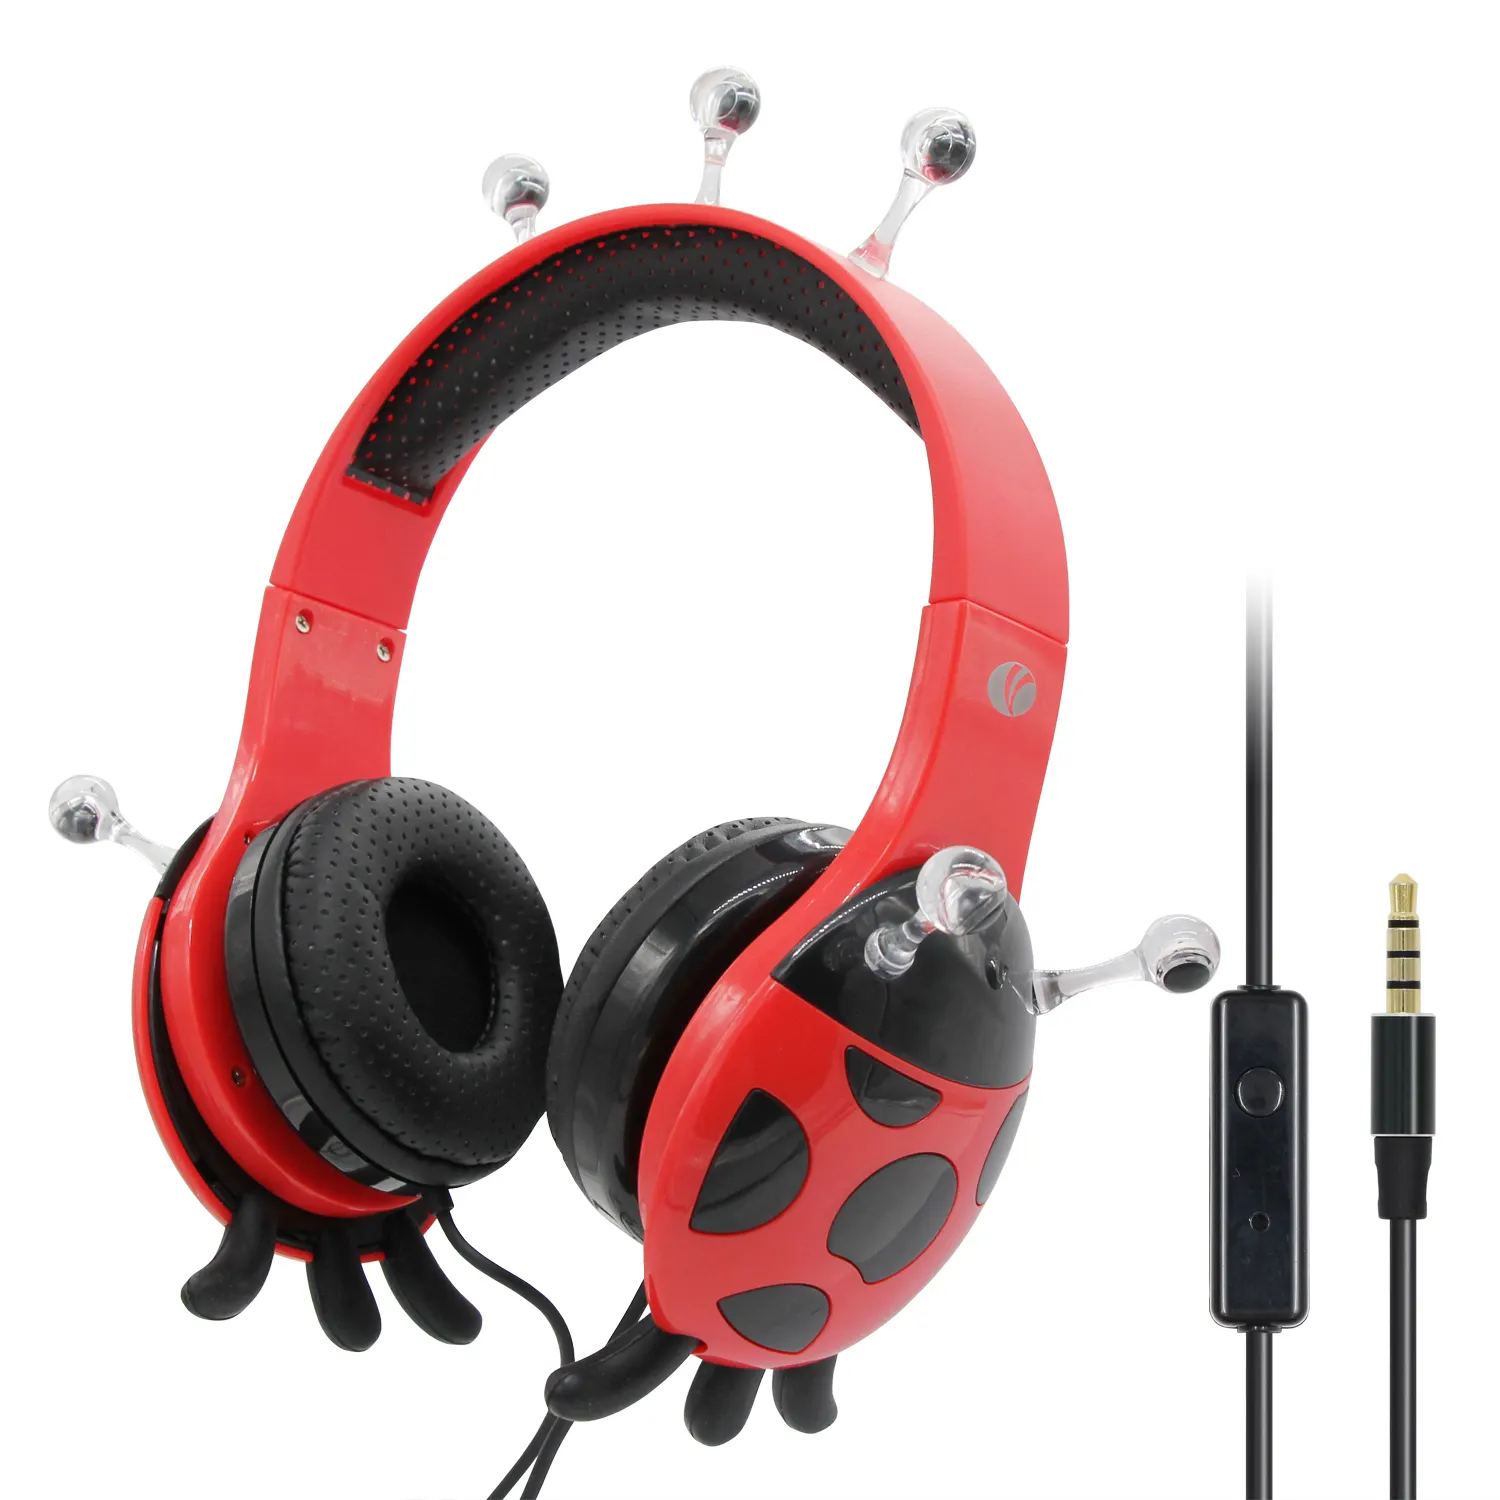 VCOM custom brand new color friendly children gift kids headphones with factory price